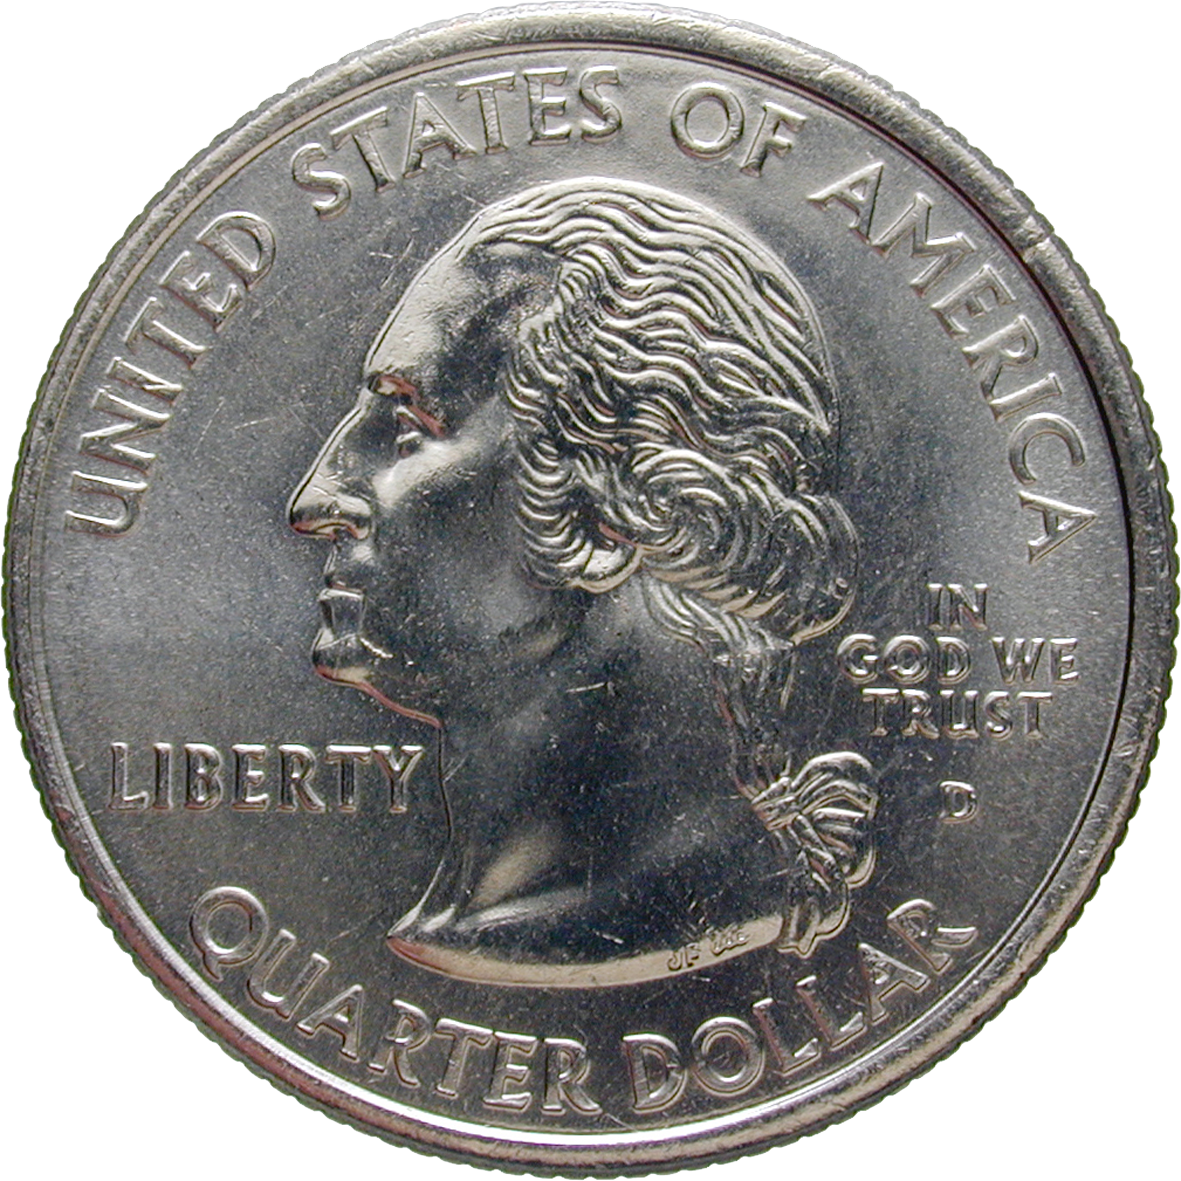 United States of America, Quarter Dollar 2008 (obverse)